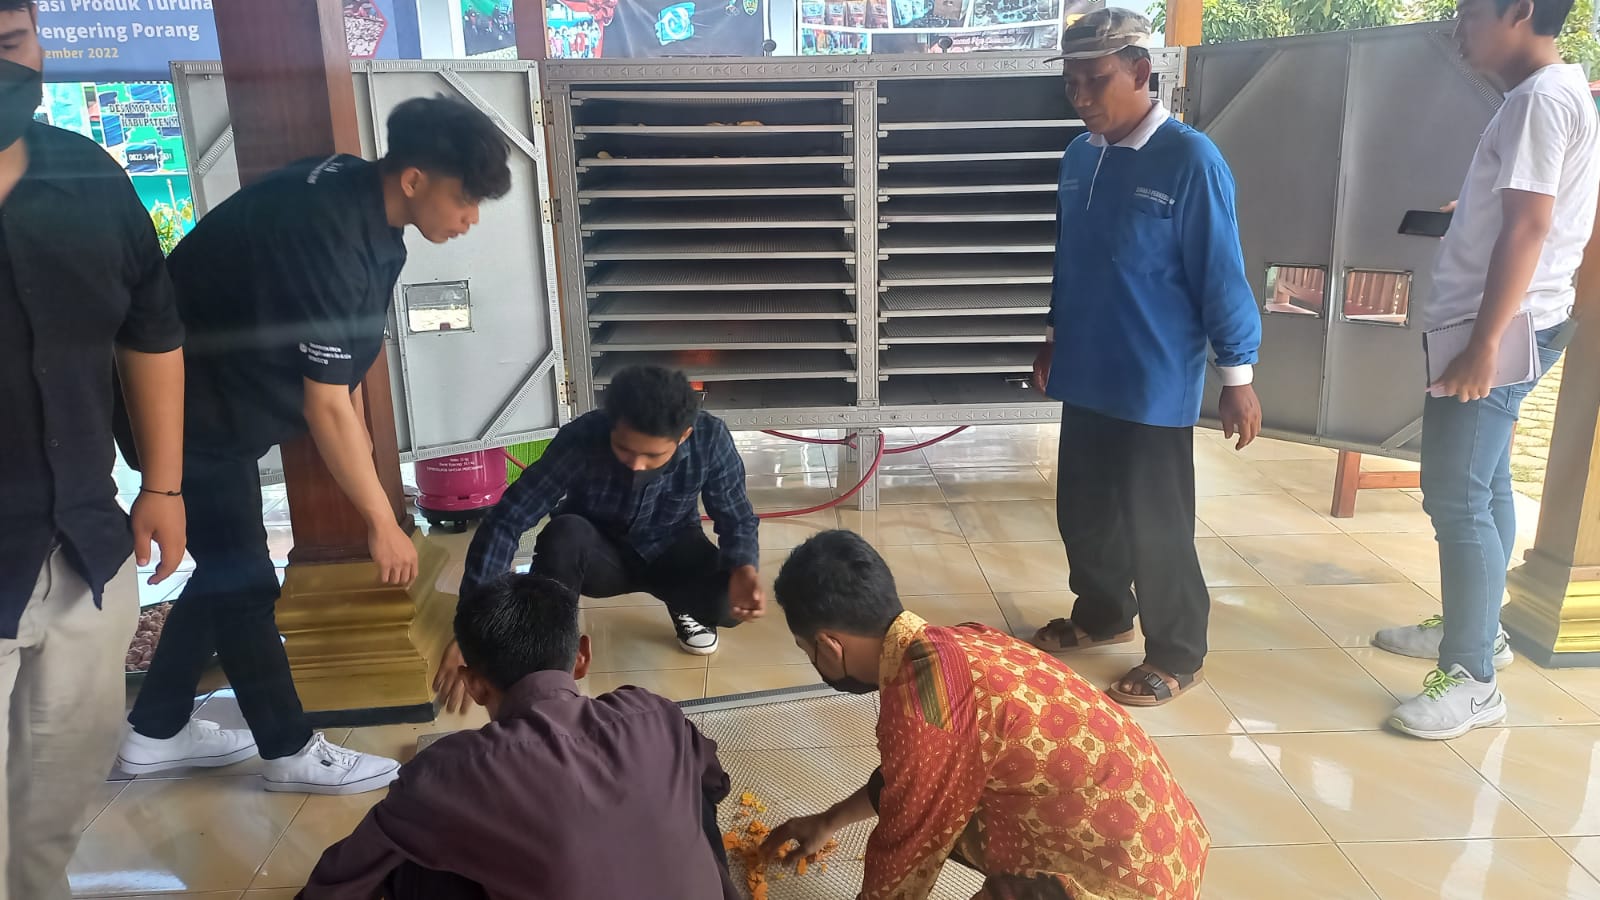 Pengabdian Masyarakat di Desa Morang, Universitas Widya Mandala Beri Bantuan Alat Pengering Porang